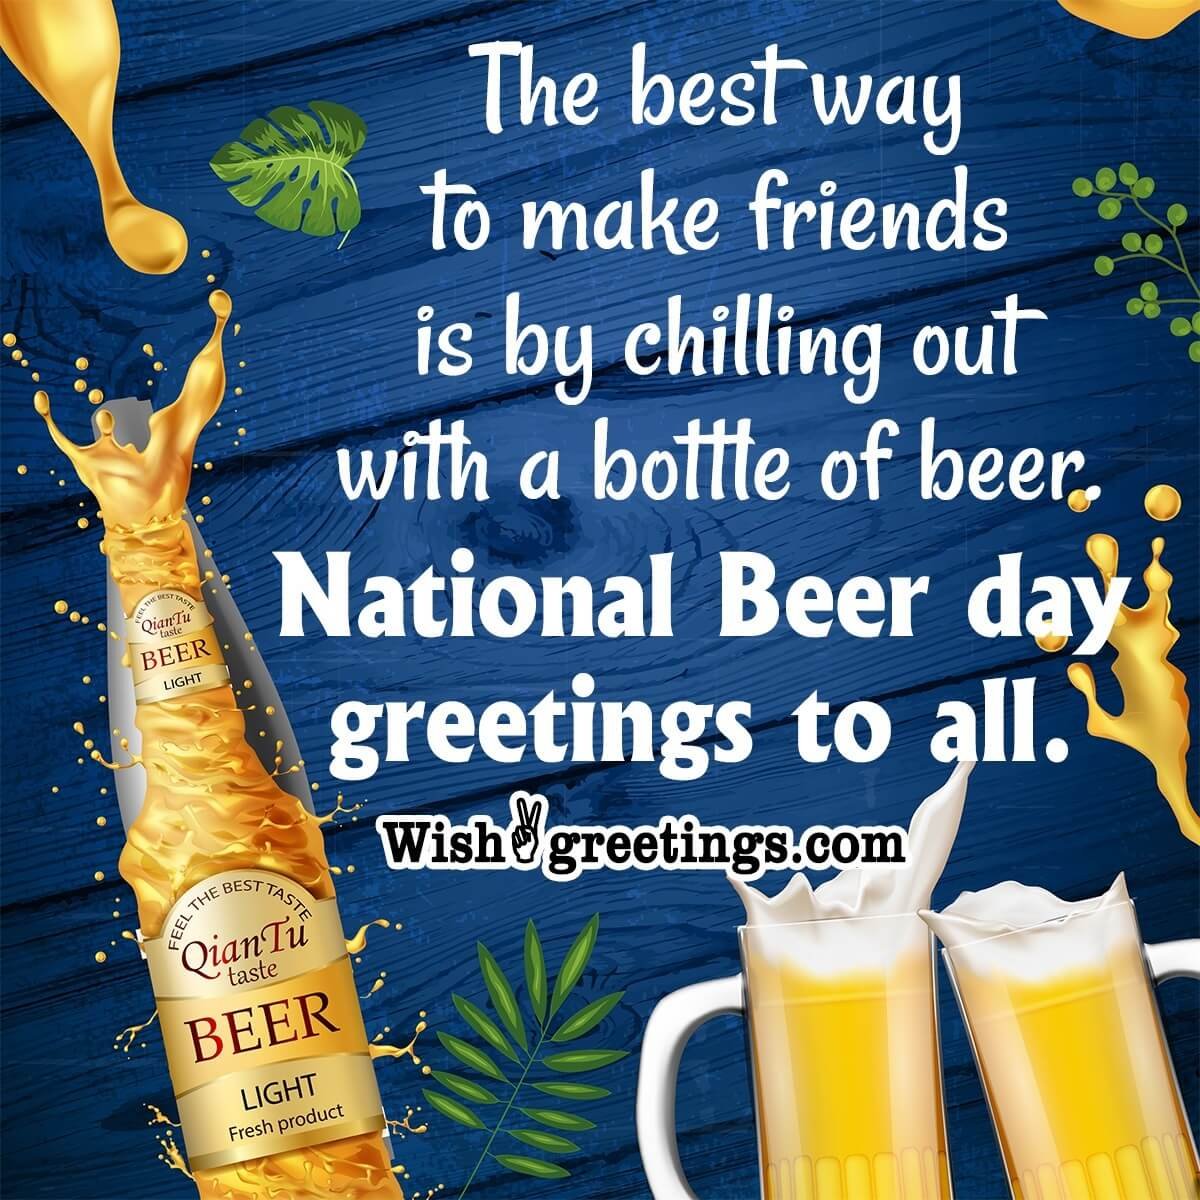 National Beer day greetings